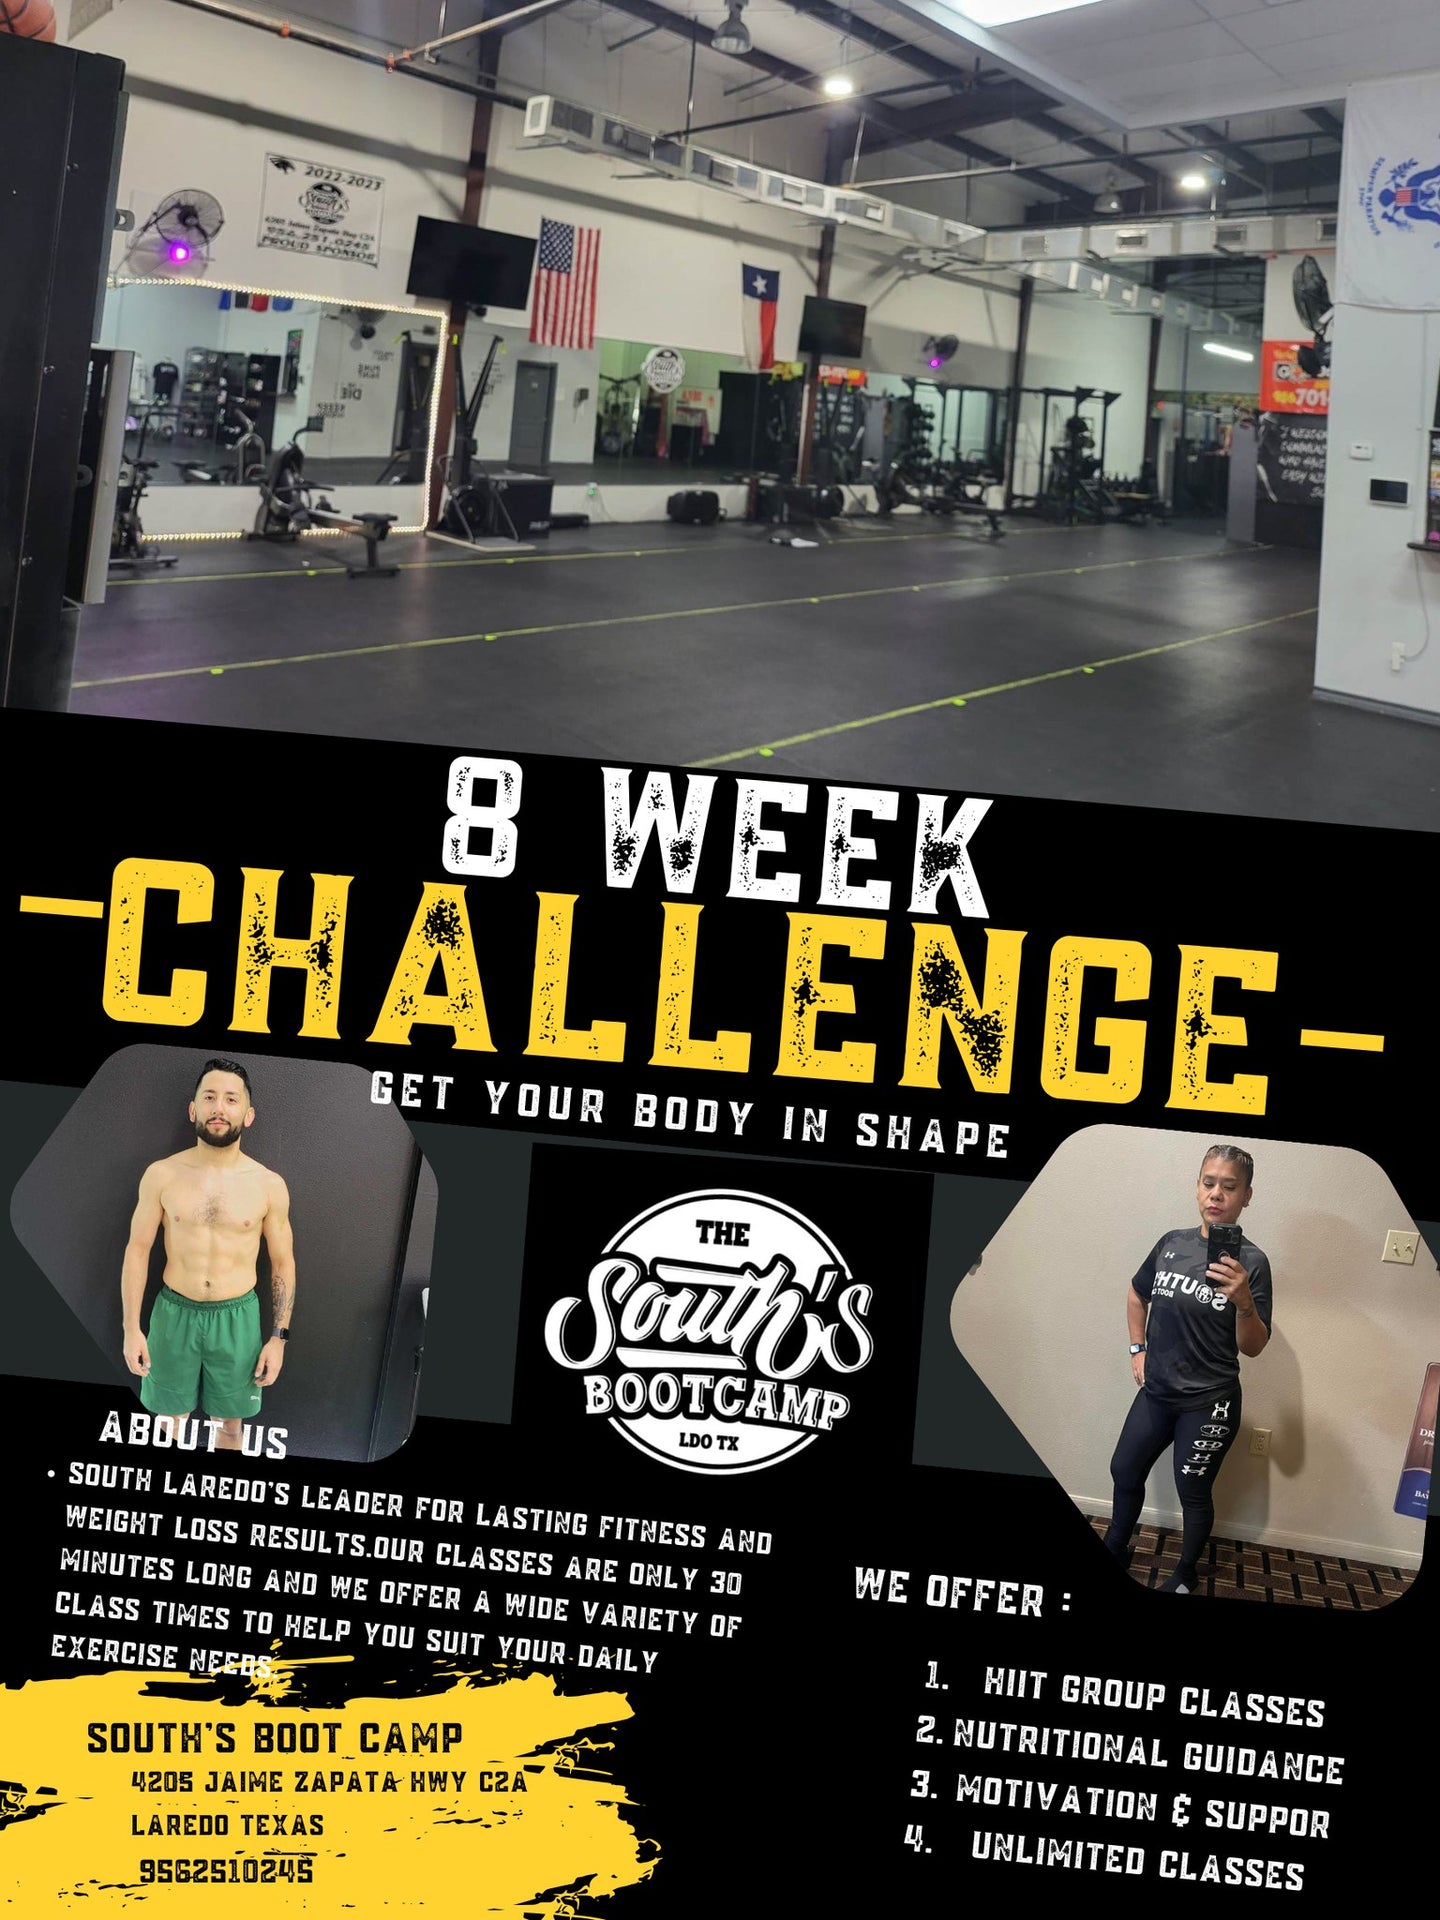 8 WEEK CHALLENGE